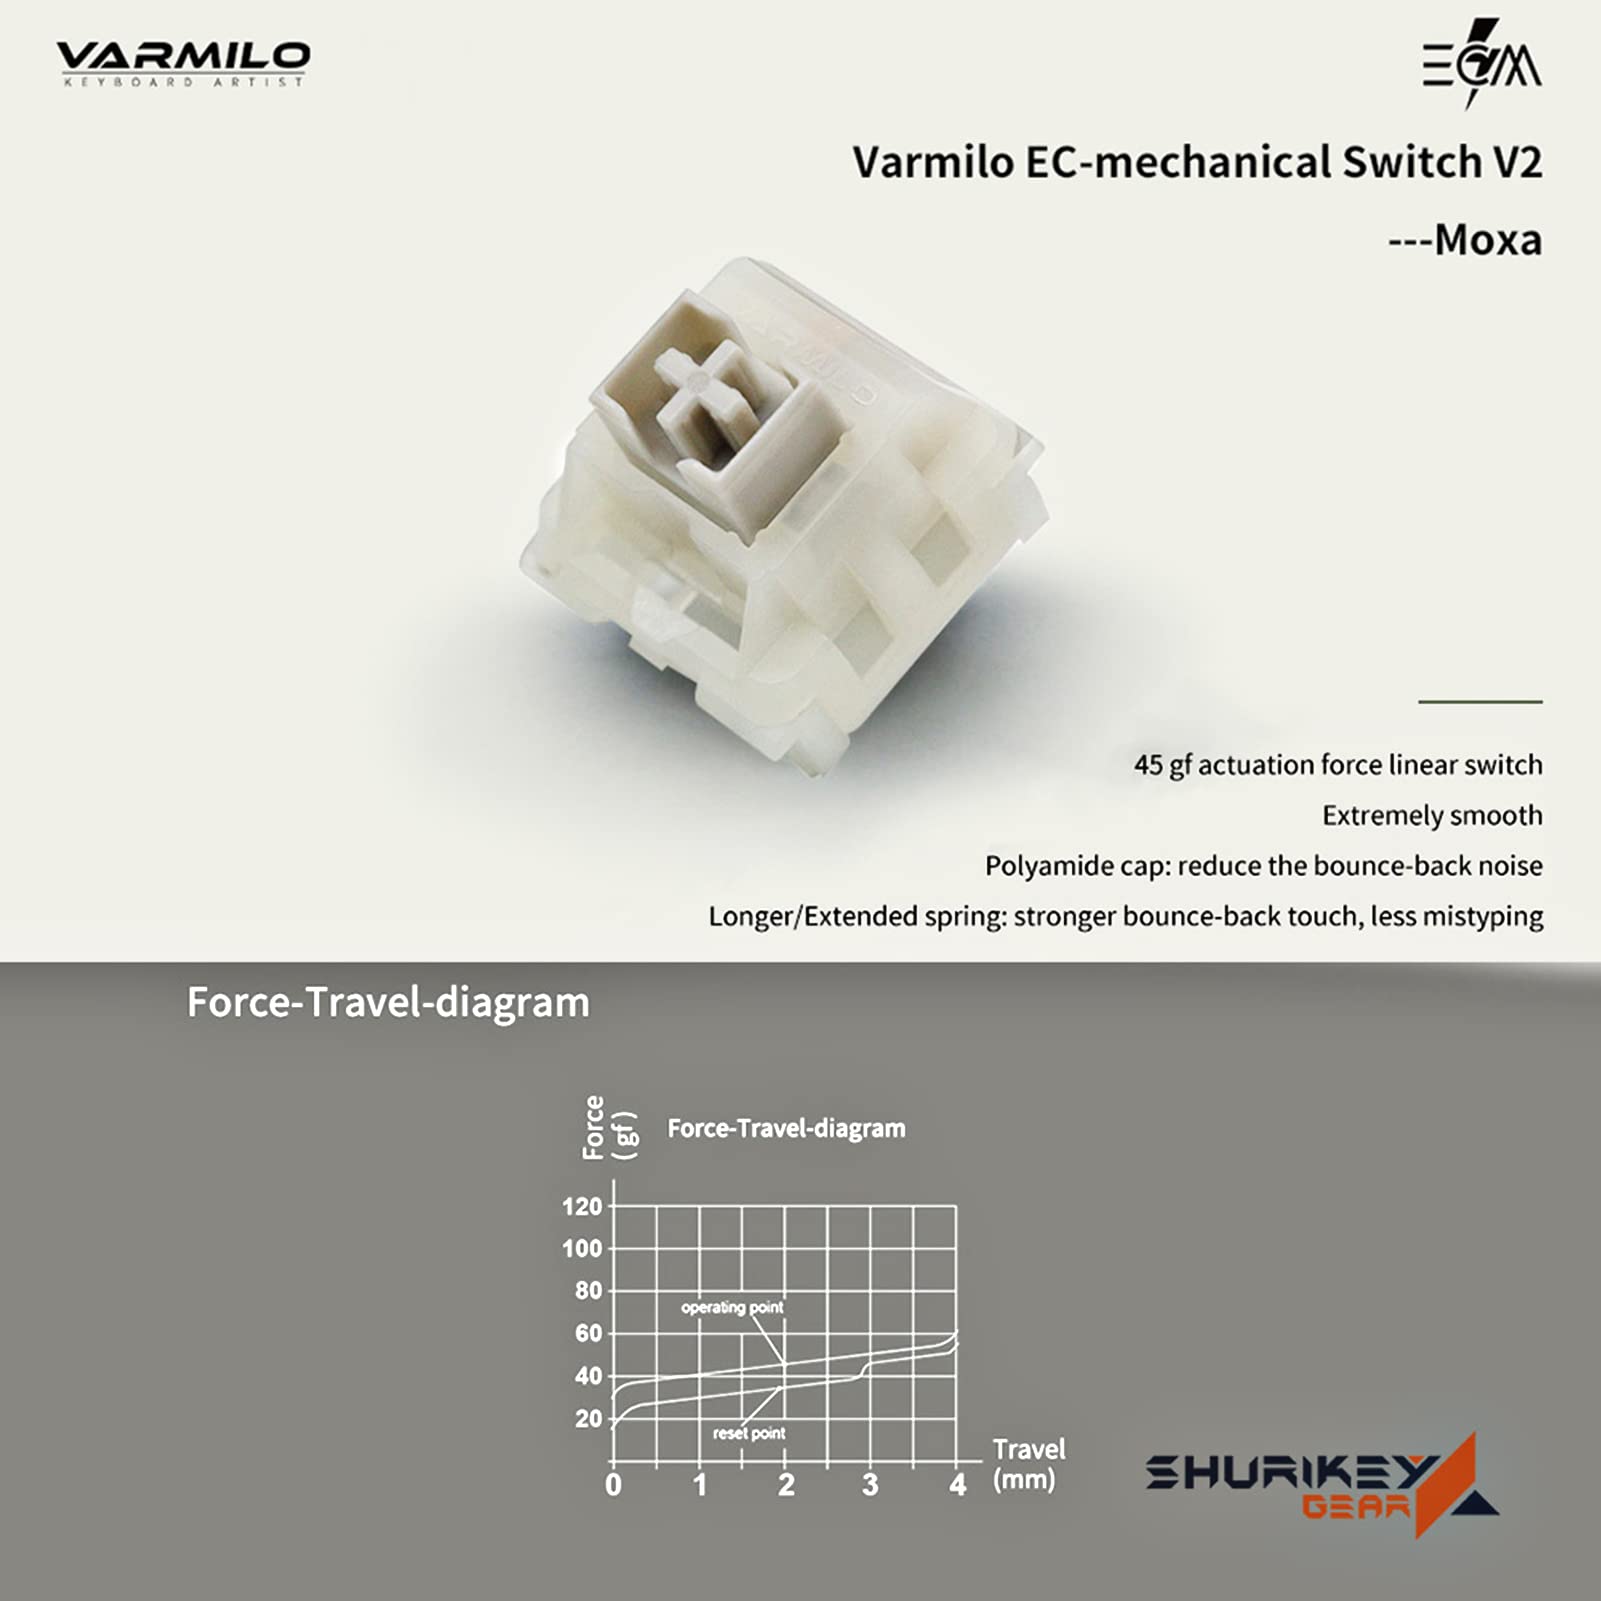 Shurikey 65% Wireless Mechanical Keyboard, Wired Gaming Keyboard, White LED Backlit (Varmilo EC V2 Moxa Switch) for Windows Mac OS Android - Hanzo 003